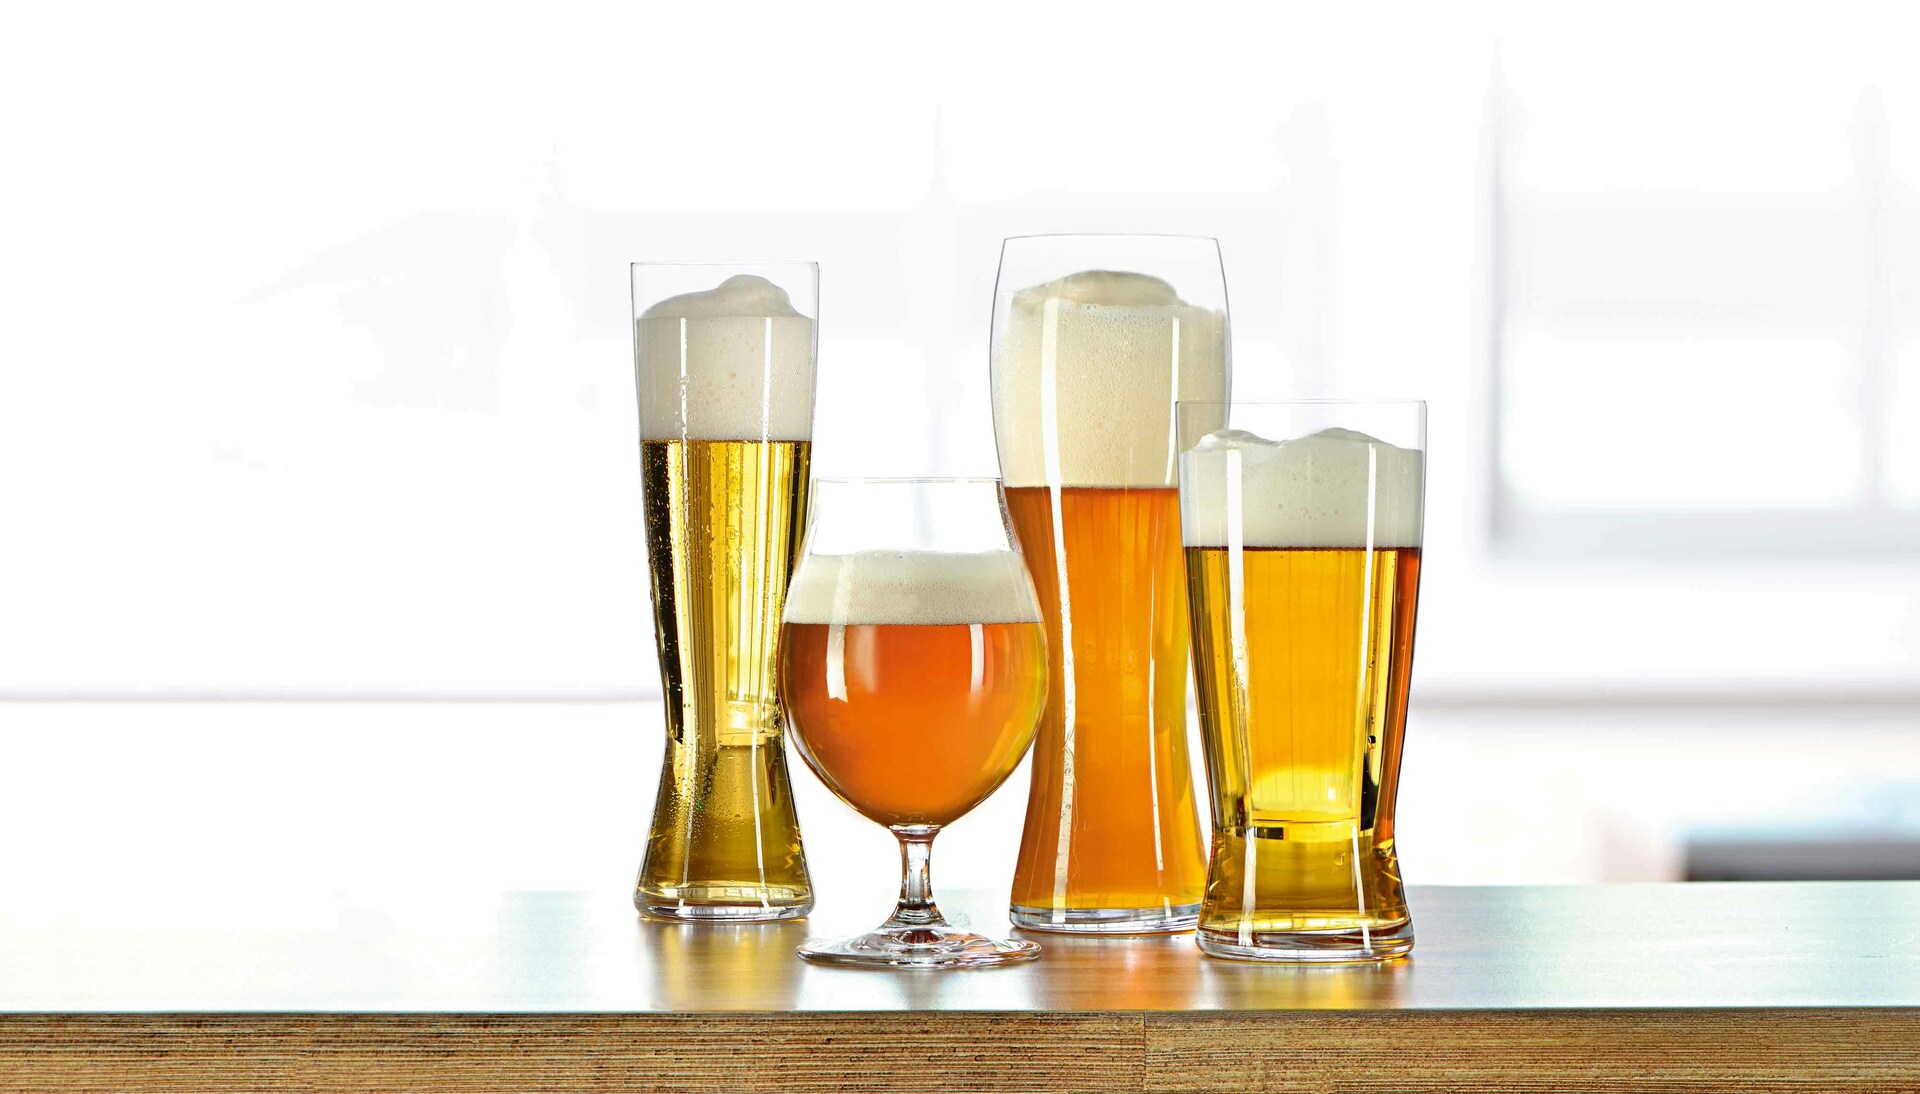 https://royaldesign.com/image/2/spiegelau-beer-classic-tasting-glass-kit-4-pcs-3